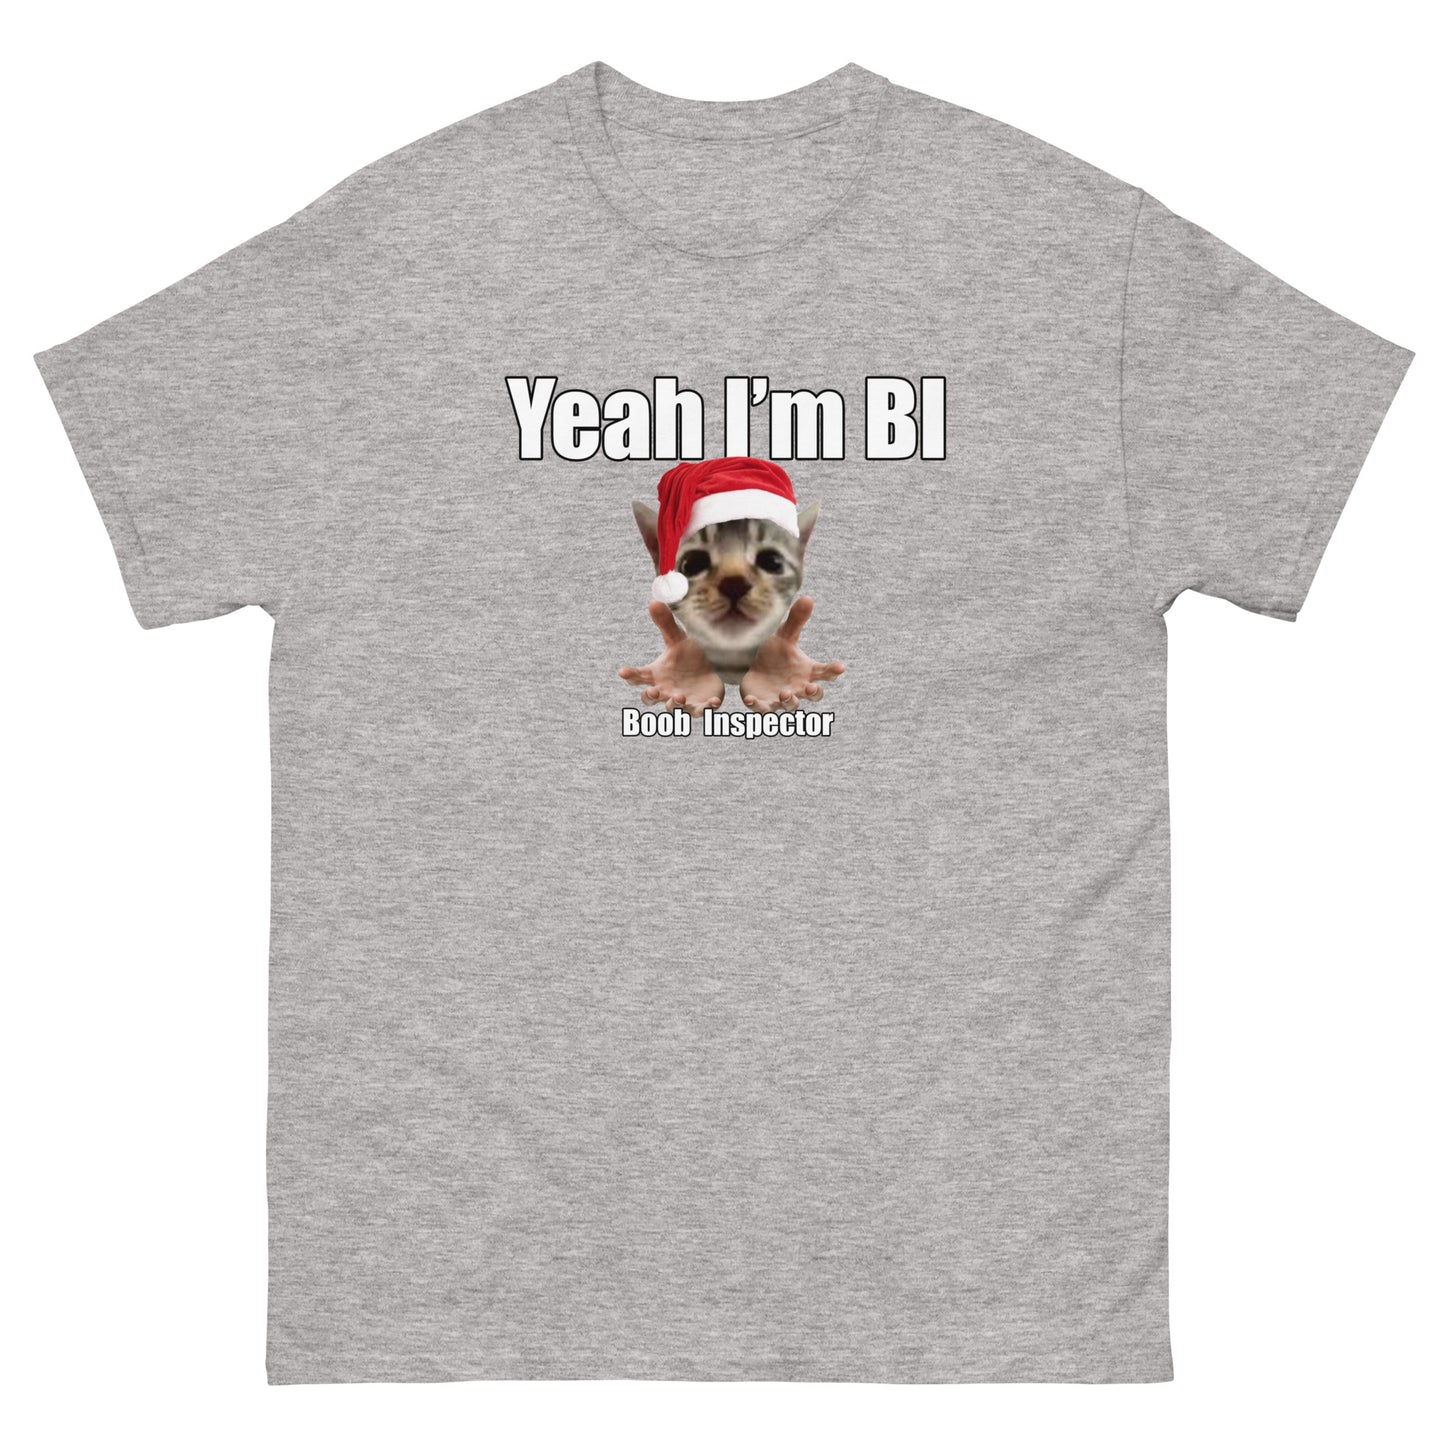 Świąteczna koszulka Boob Inspector (BI).